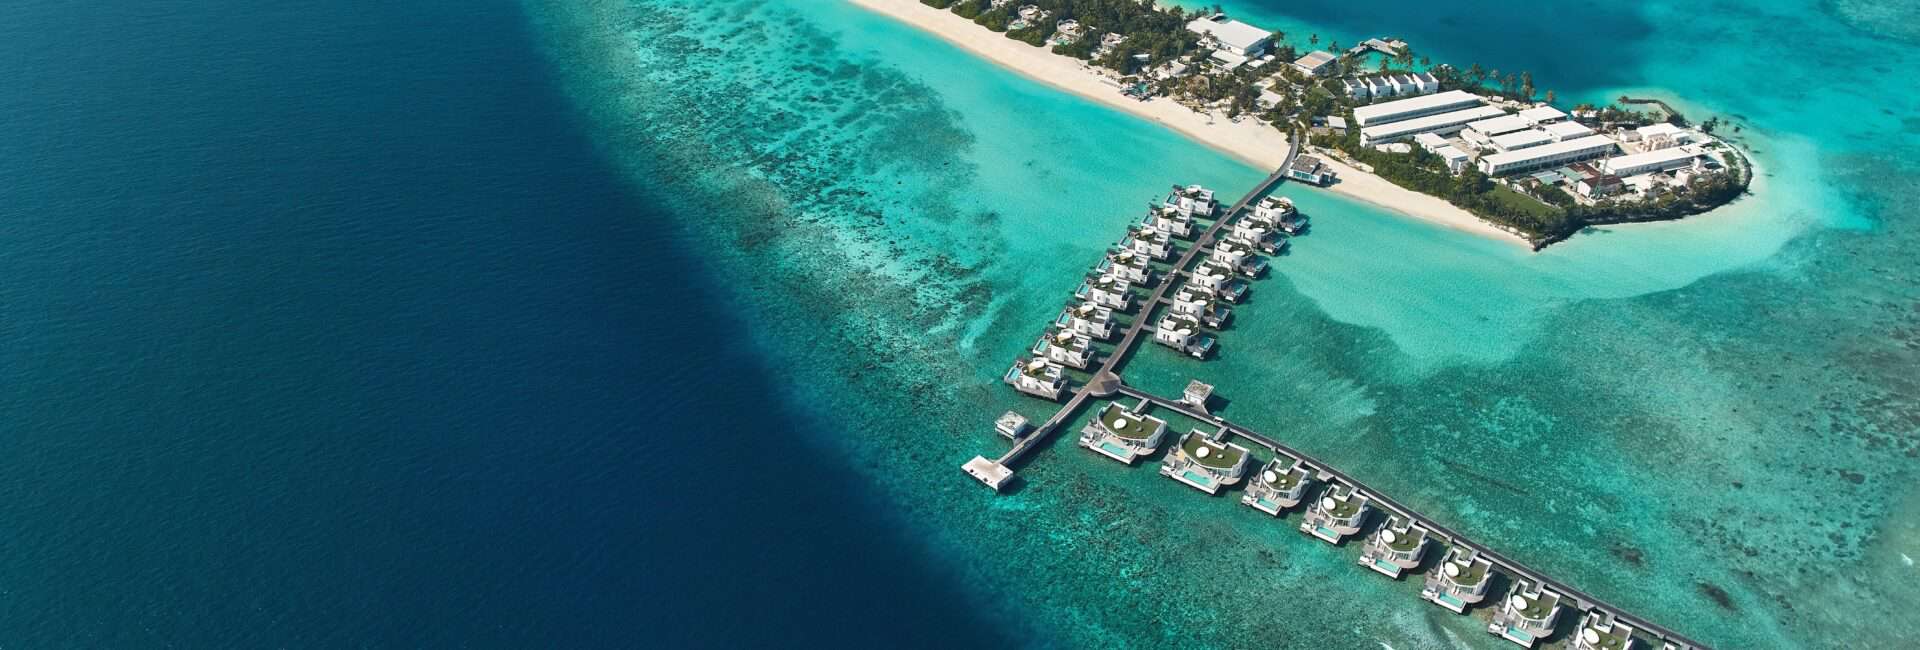 Jumeirah Maldives_High_resolution_300dpi-Jumeirah Maldives - Full Island Aerial